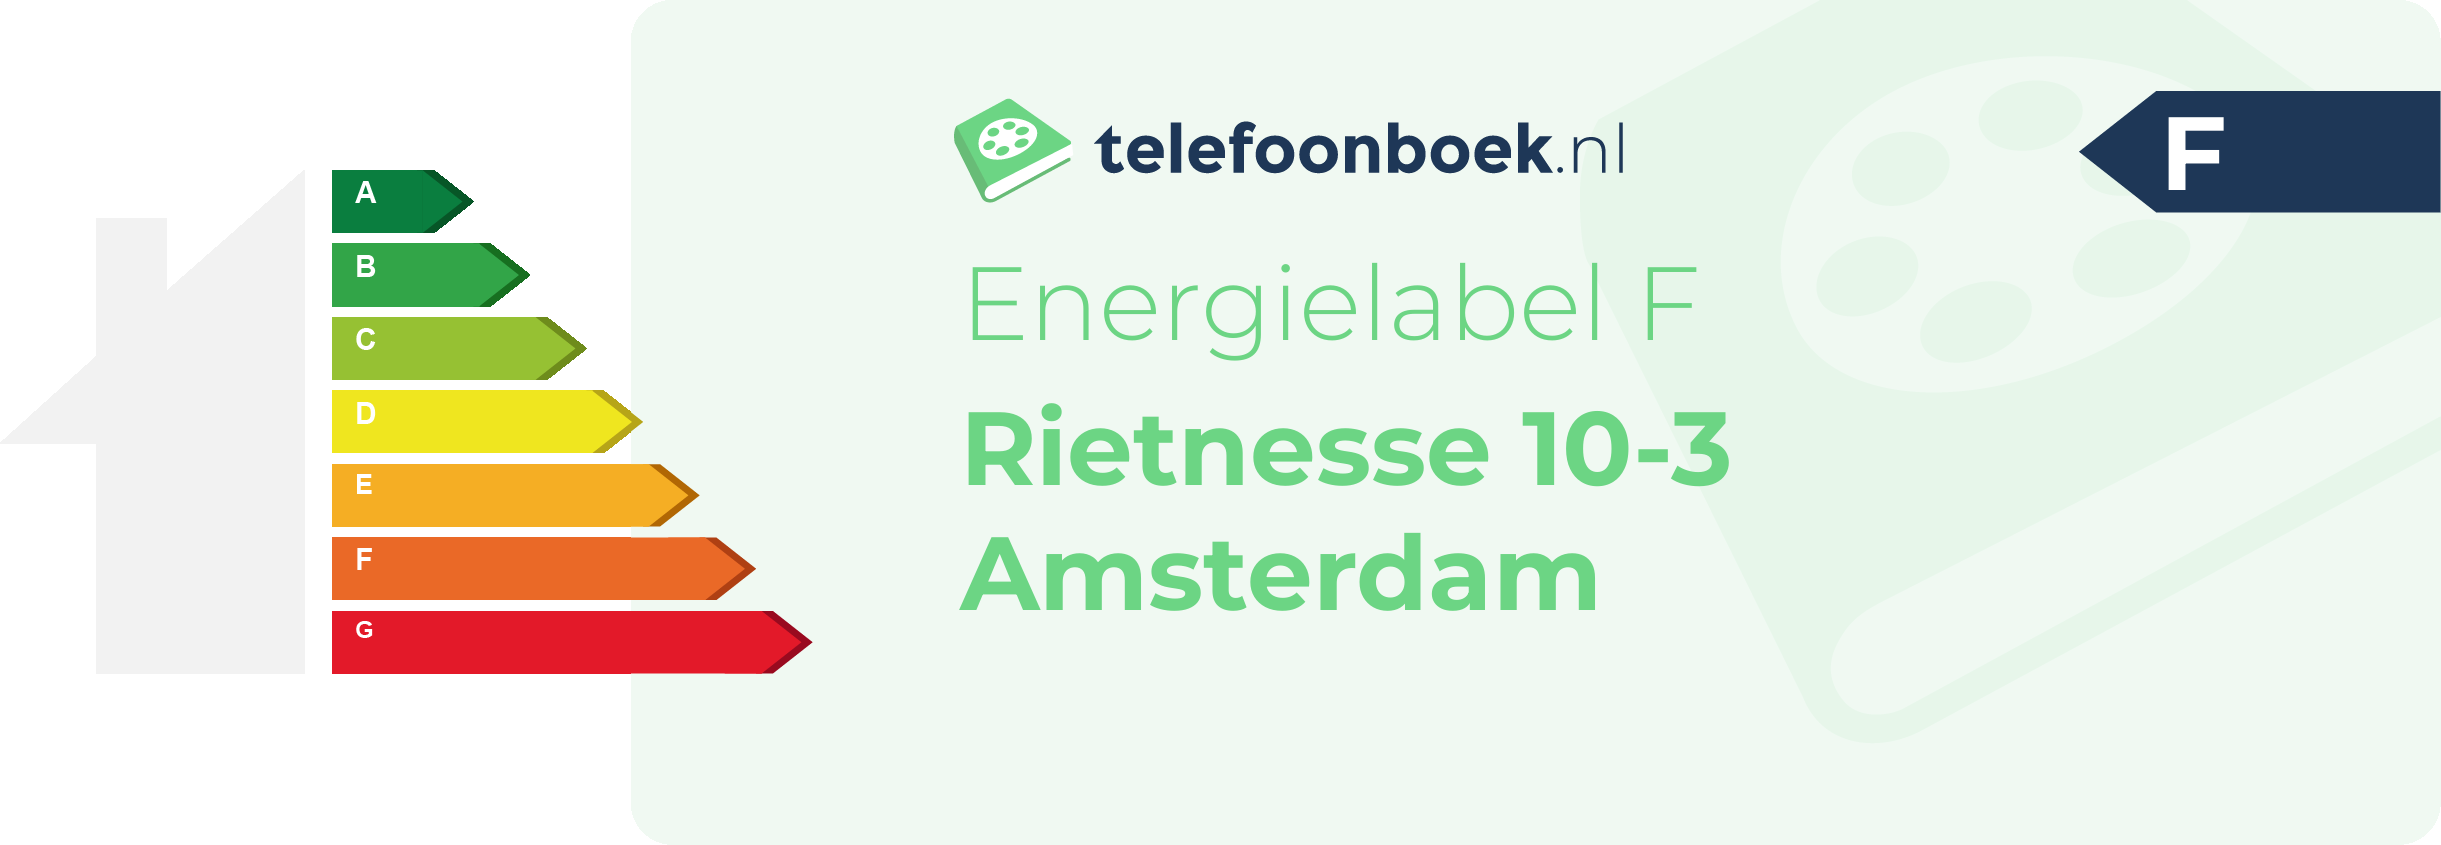 Energielabel Rietnesse 10-3 Amsterdam